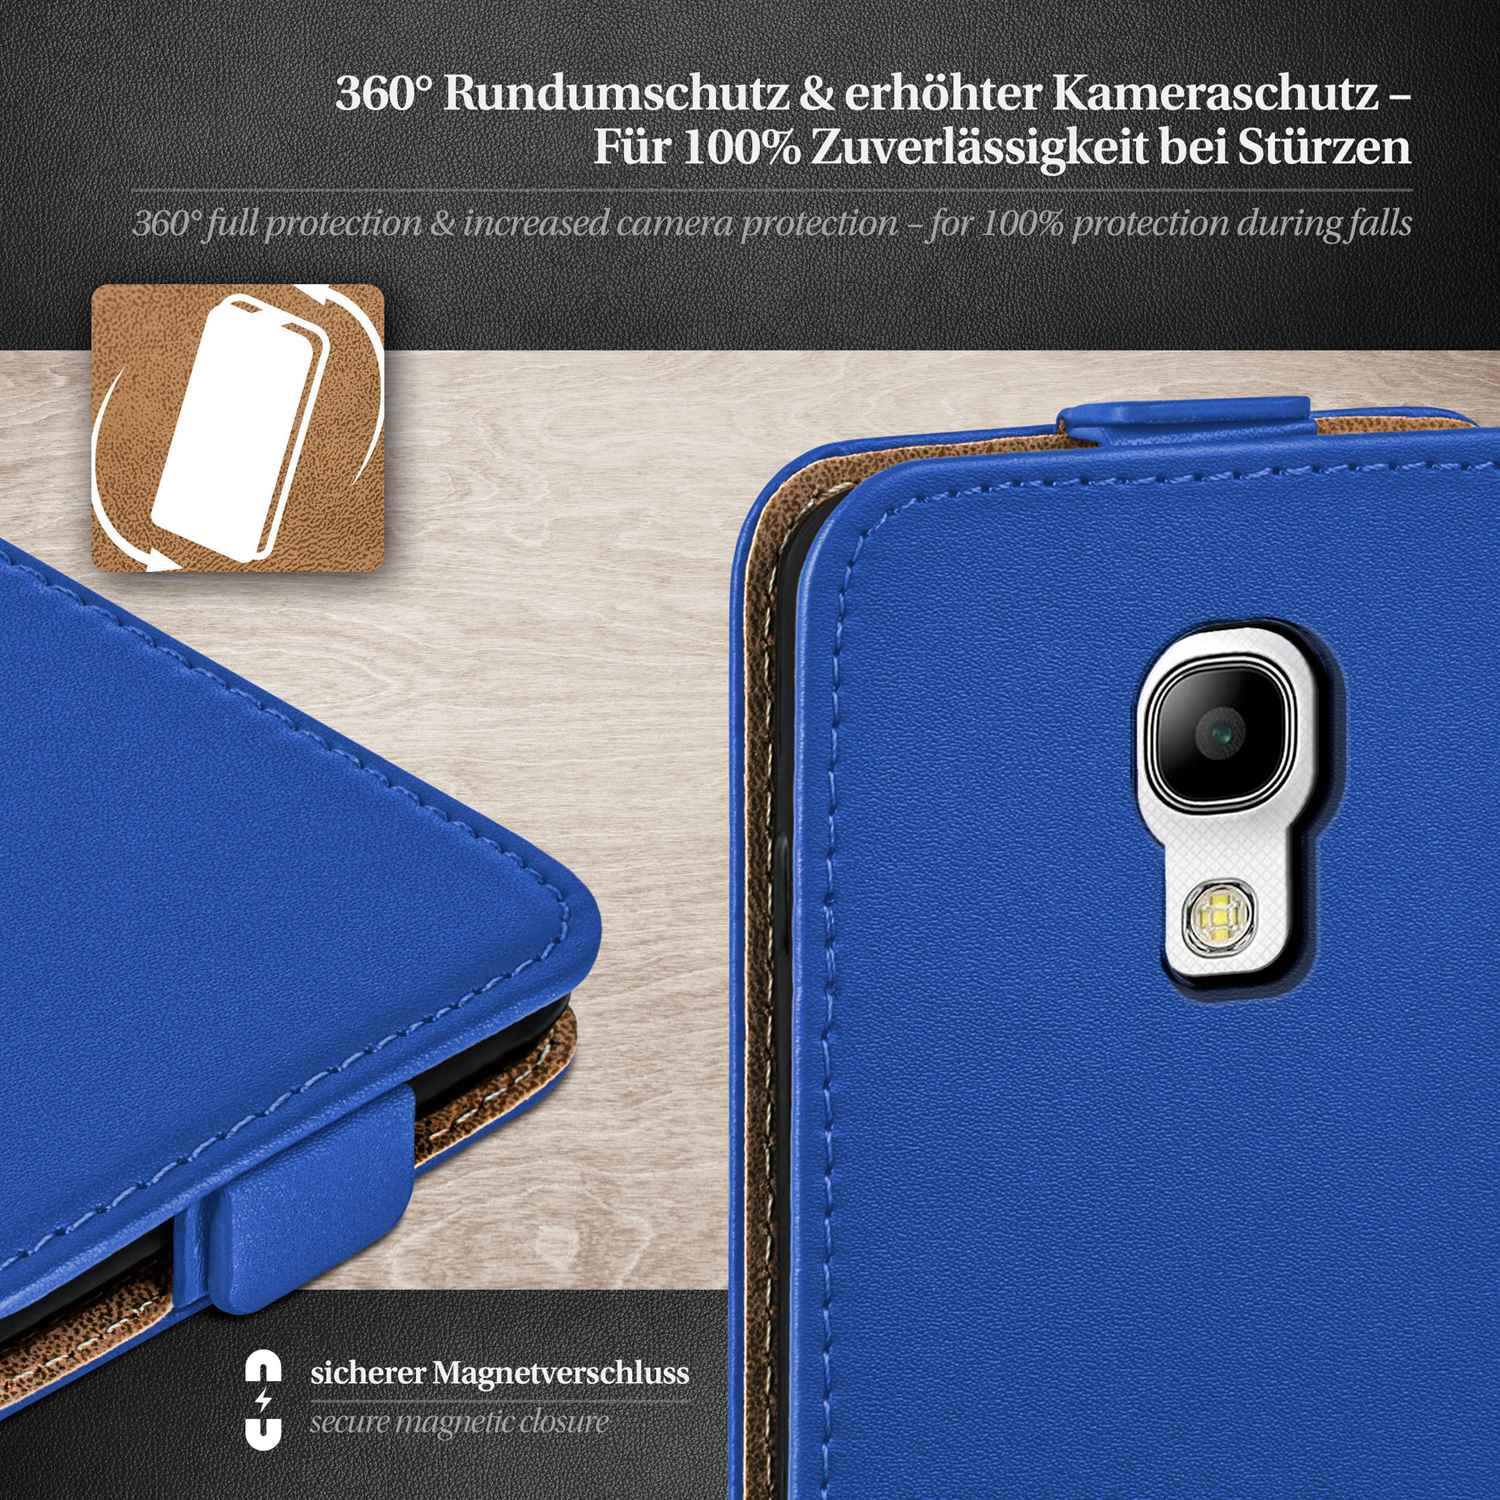 Mini, Case, Royal-Blue Samsung, MOEX Flip Galaxy Cover, S4 Flip